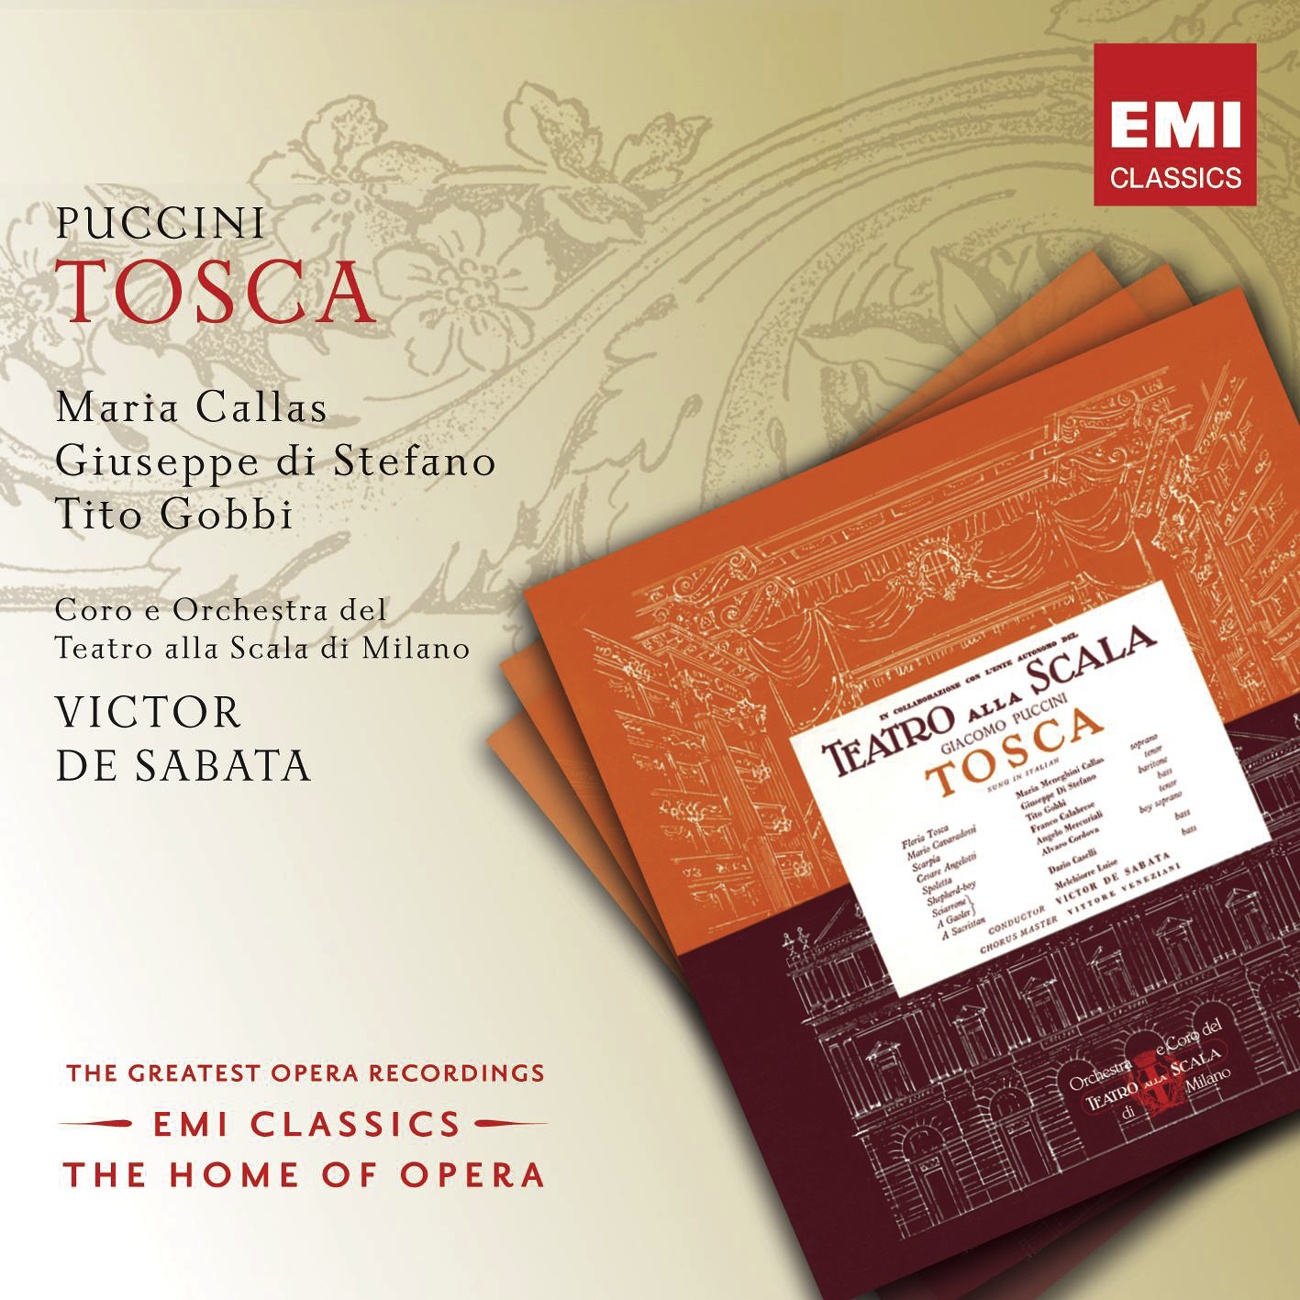 Tosca (2002 Digital Remaster), ACT TWO: Come tu m'odii! (Tosca/Scarpia)